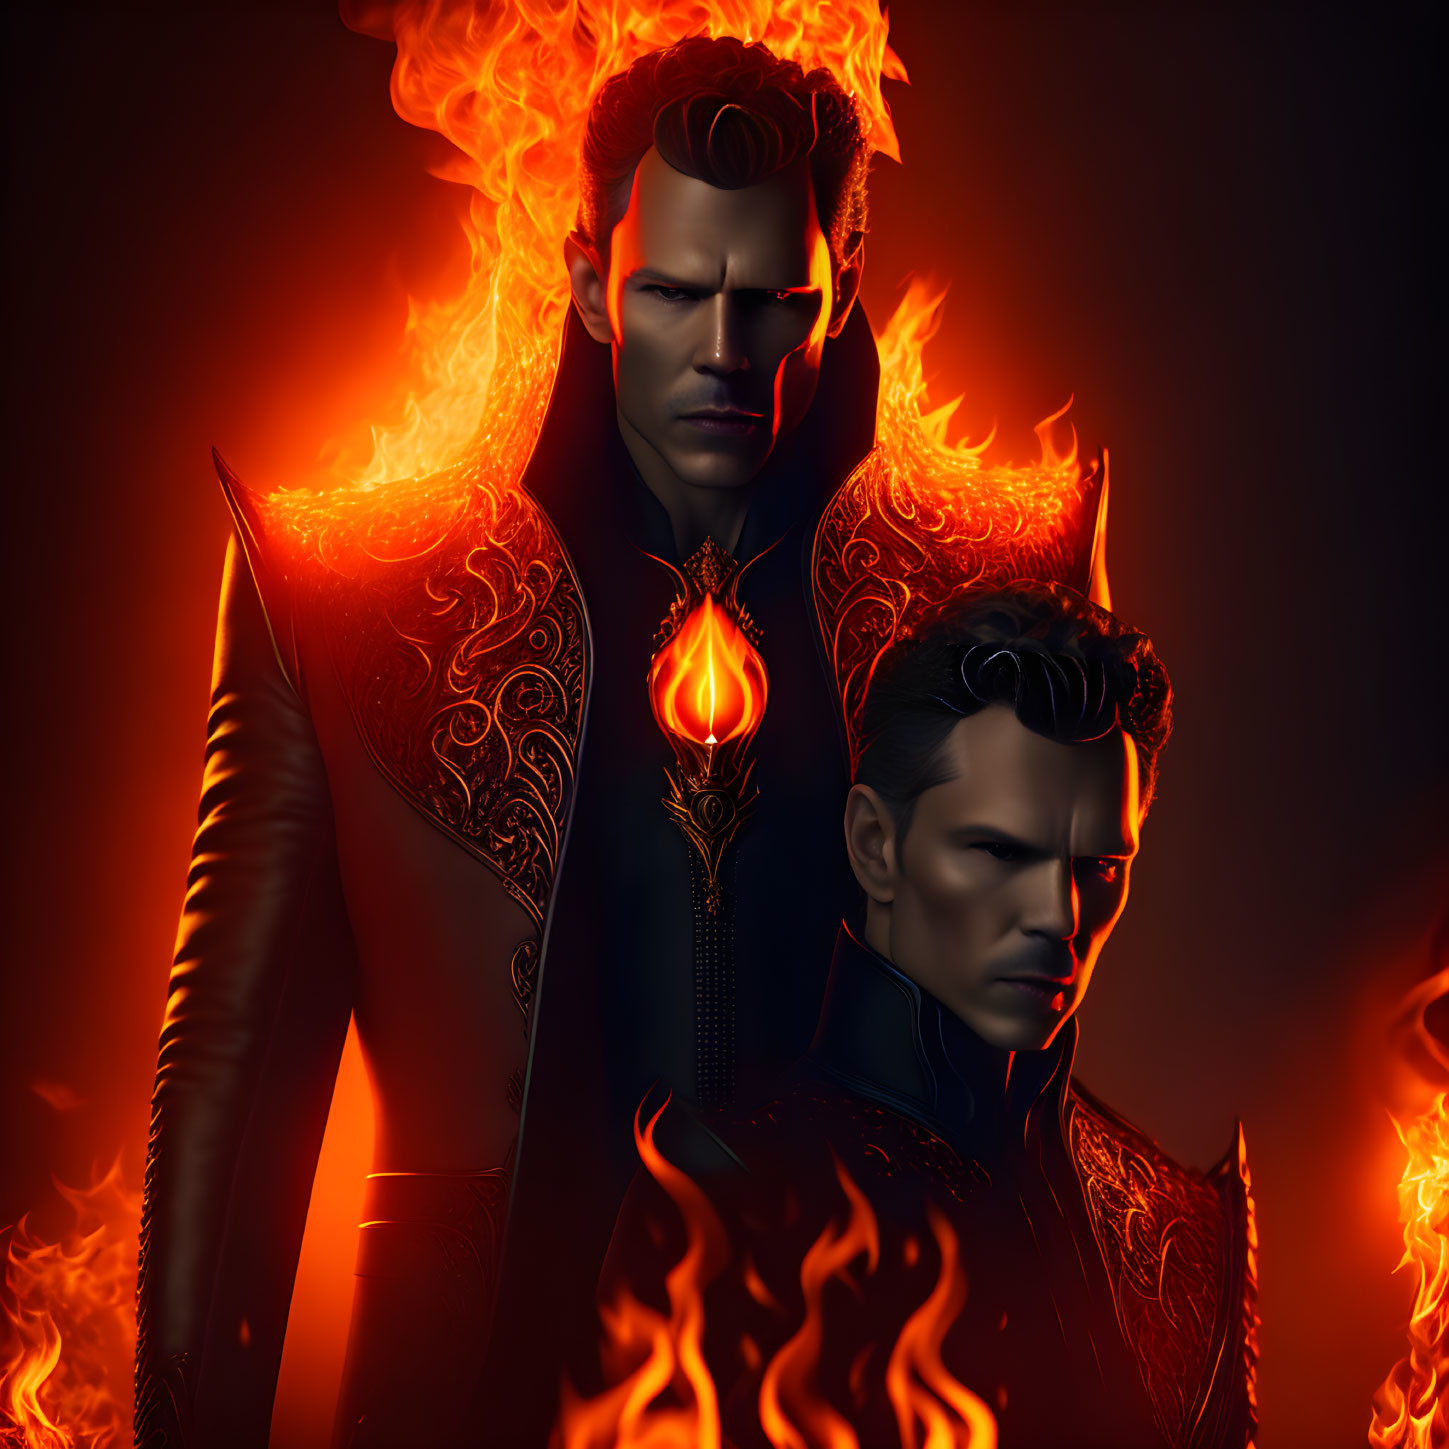 Klaus and Elijah Mikaelson